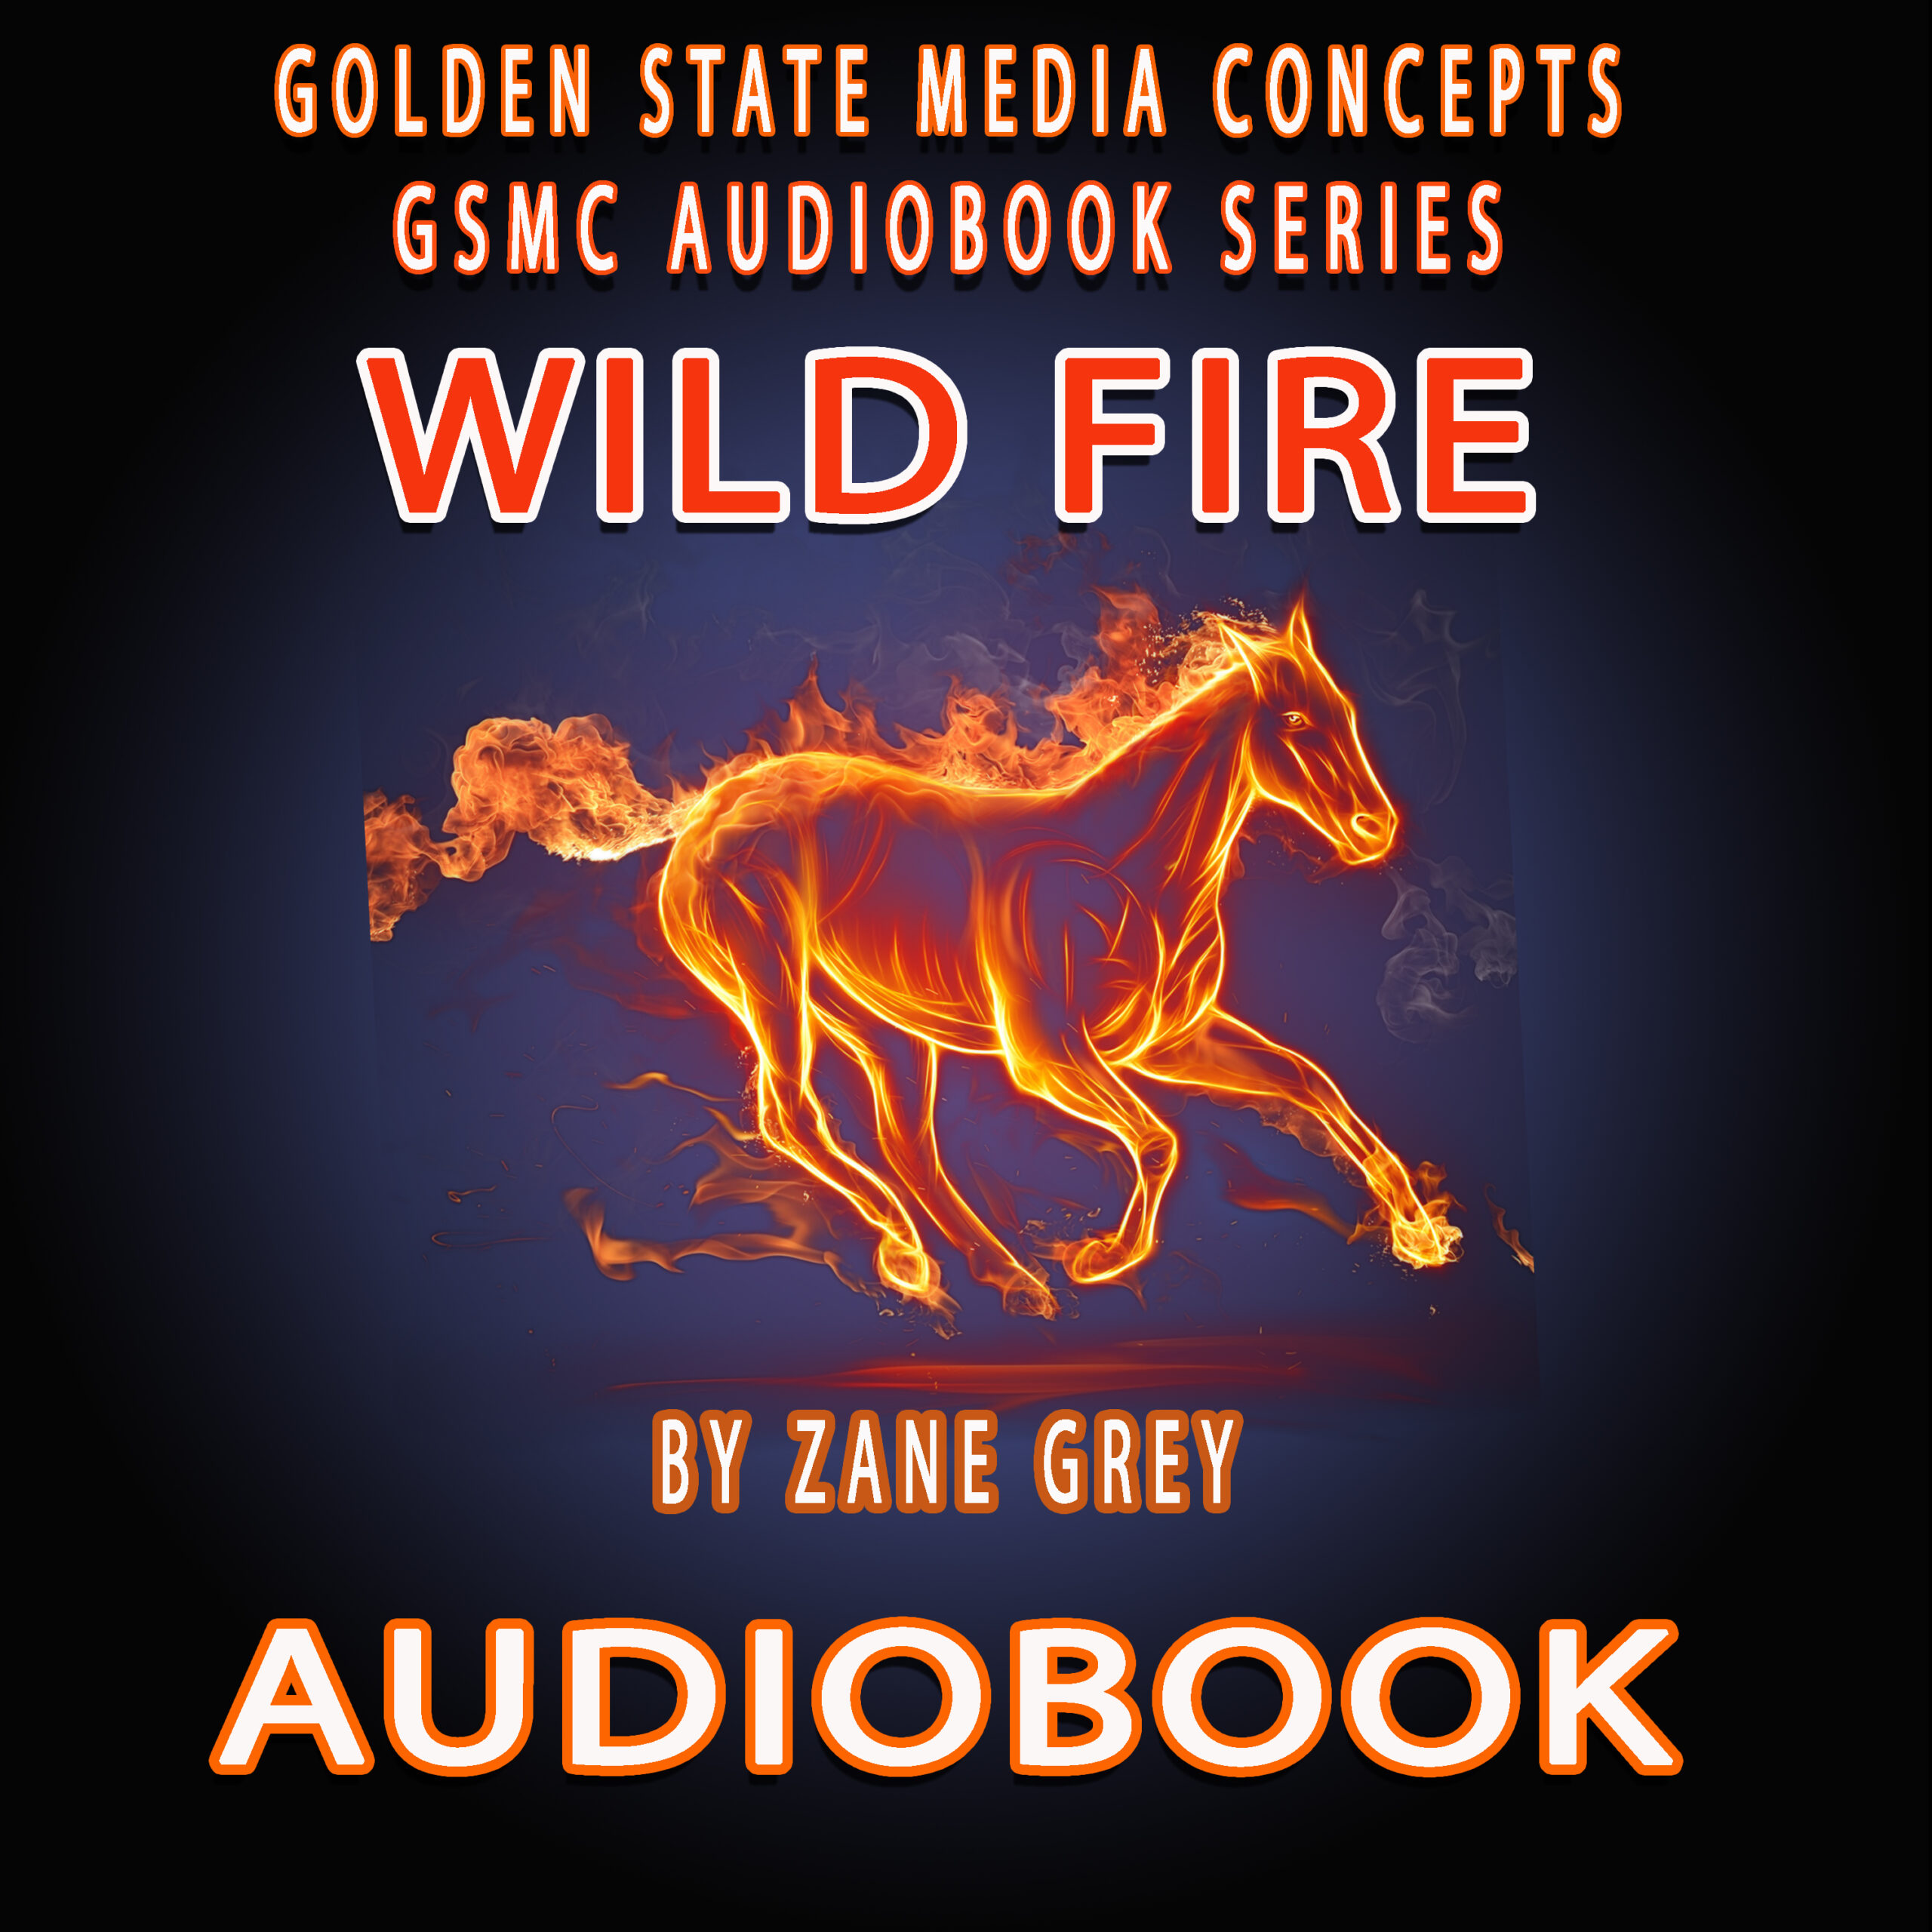 GSMC Audiobook Series: Wildfire by Zane Grey